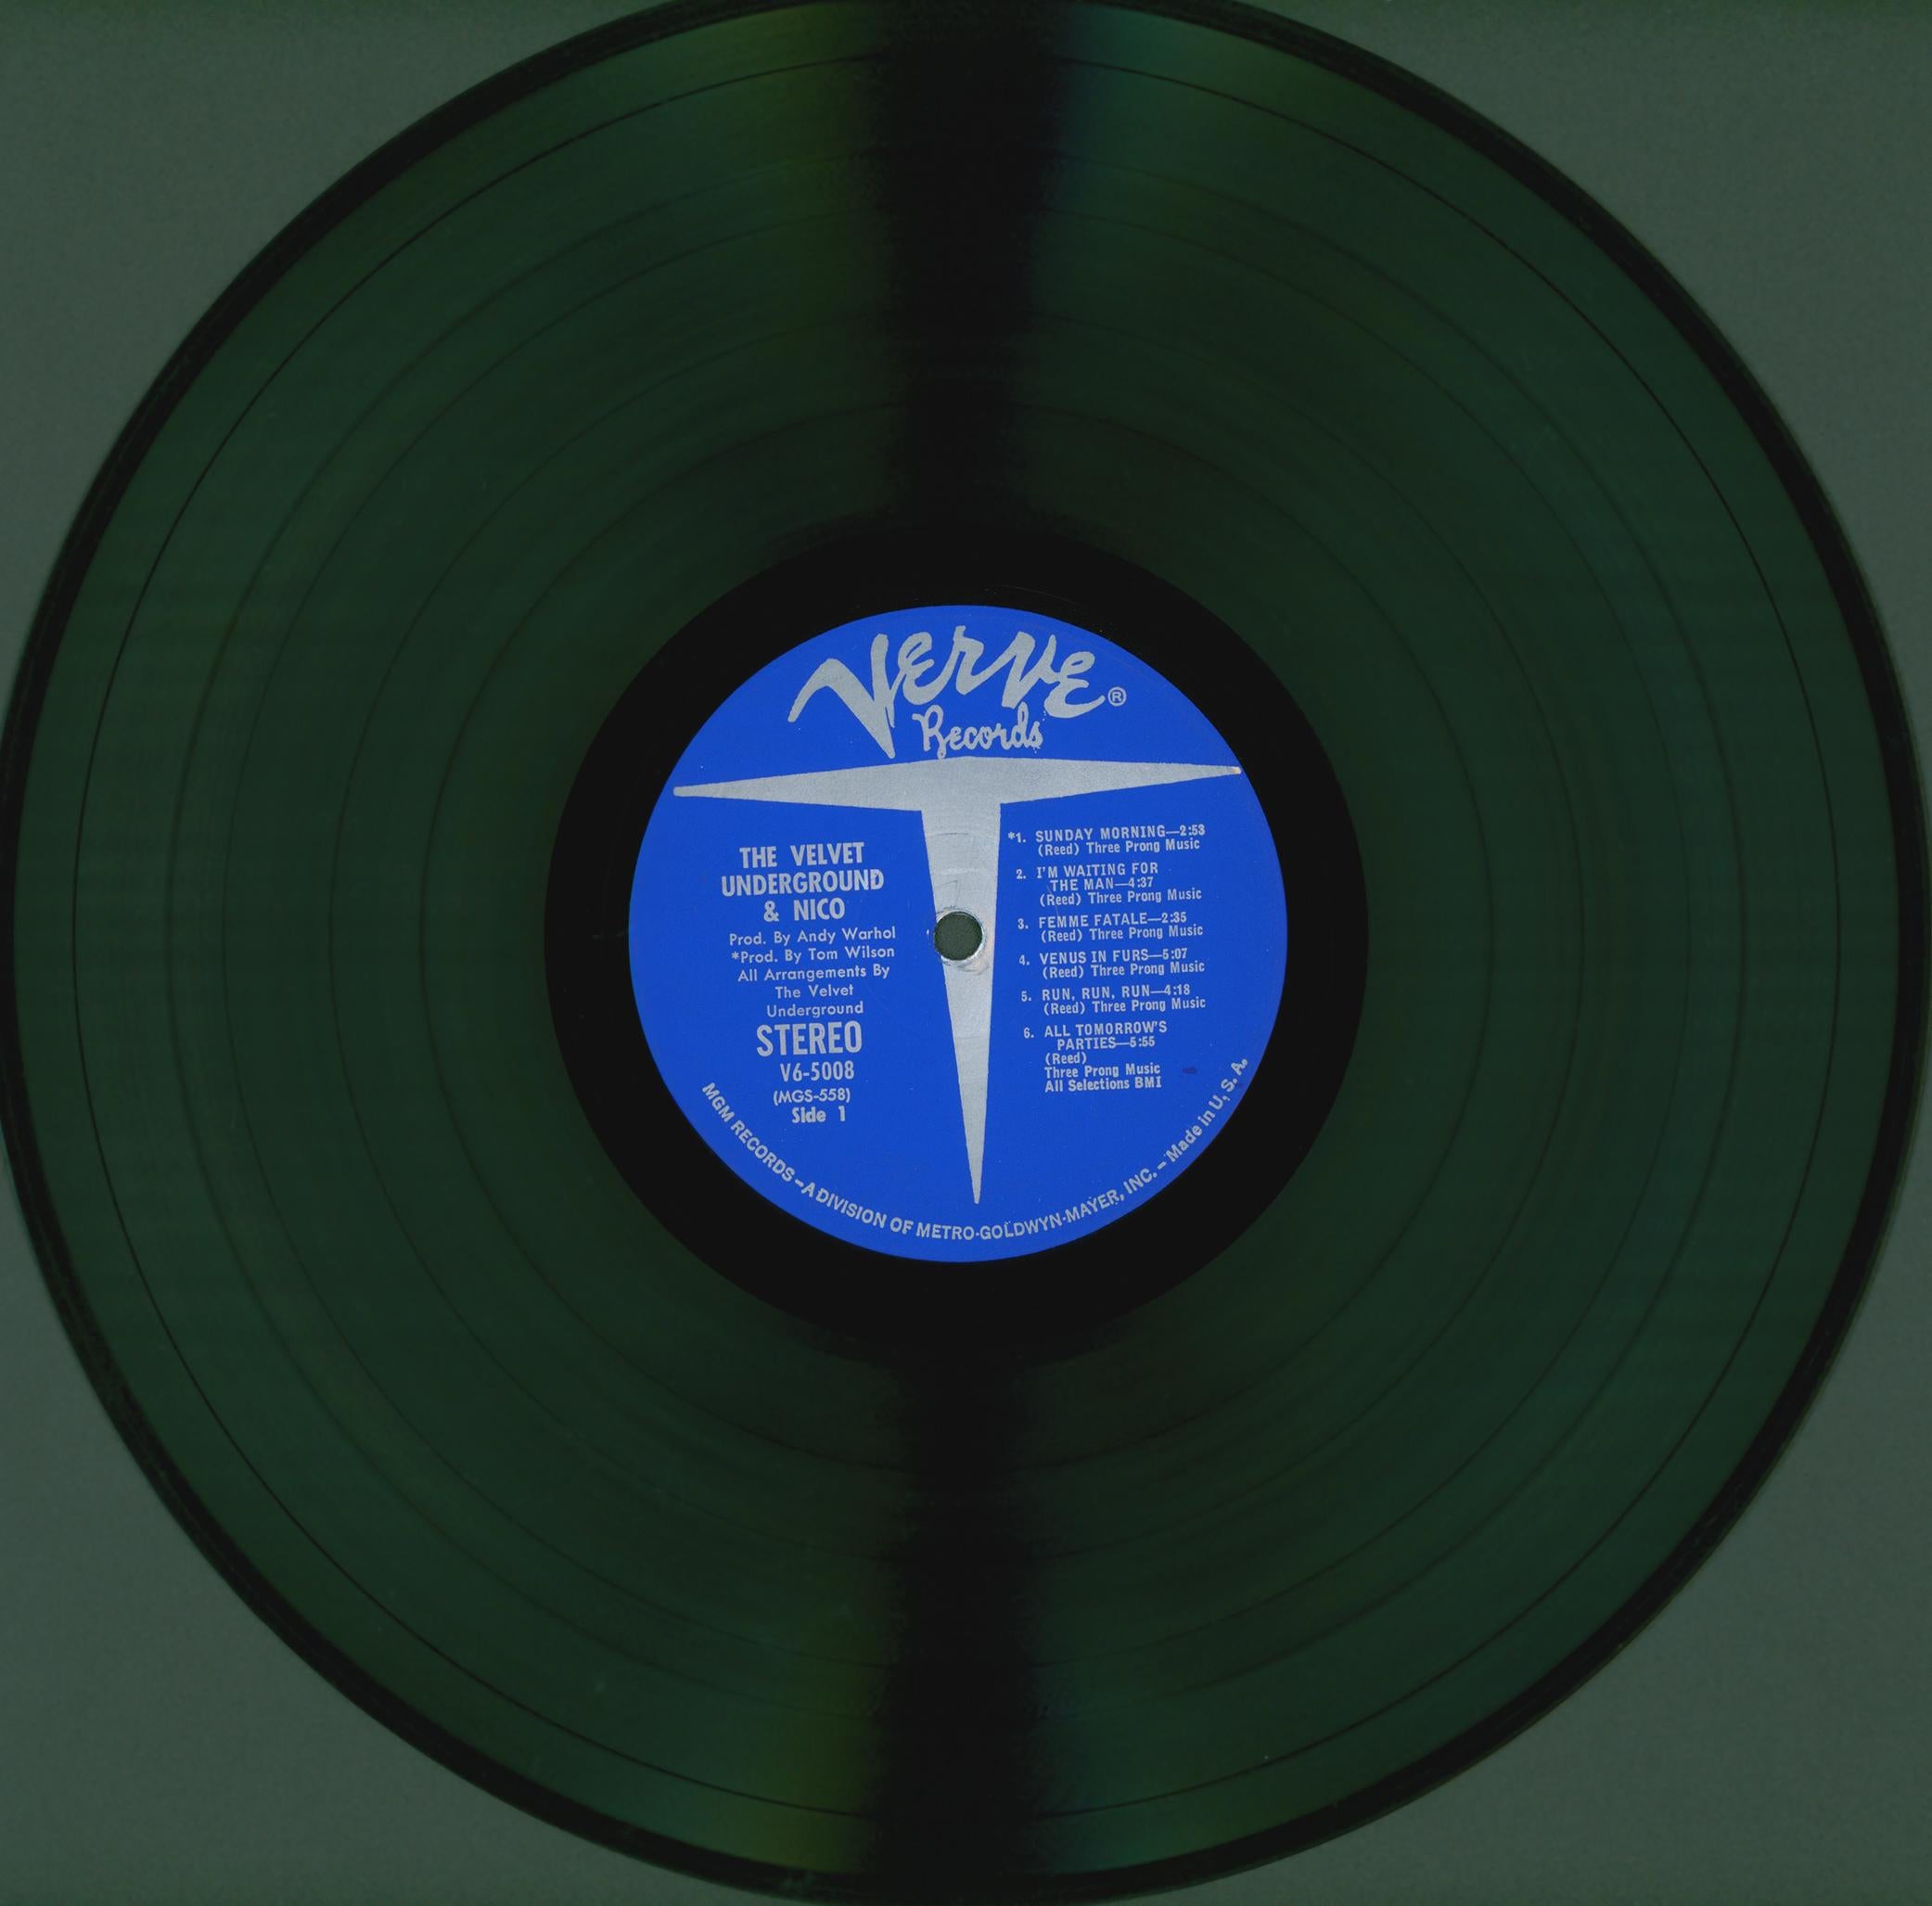 Andy Warhol Banana: Nico & The Velvet Underground Vinyl Record (set of 4 works) 9